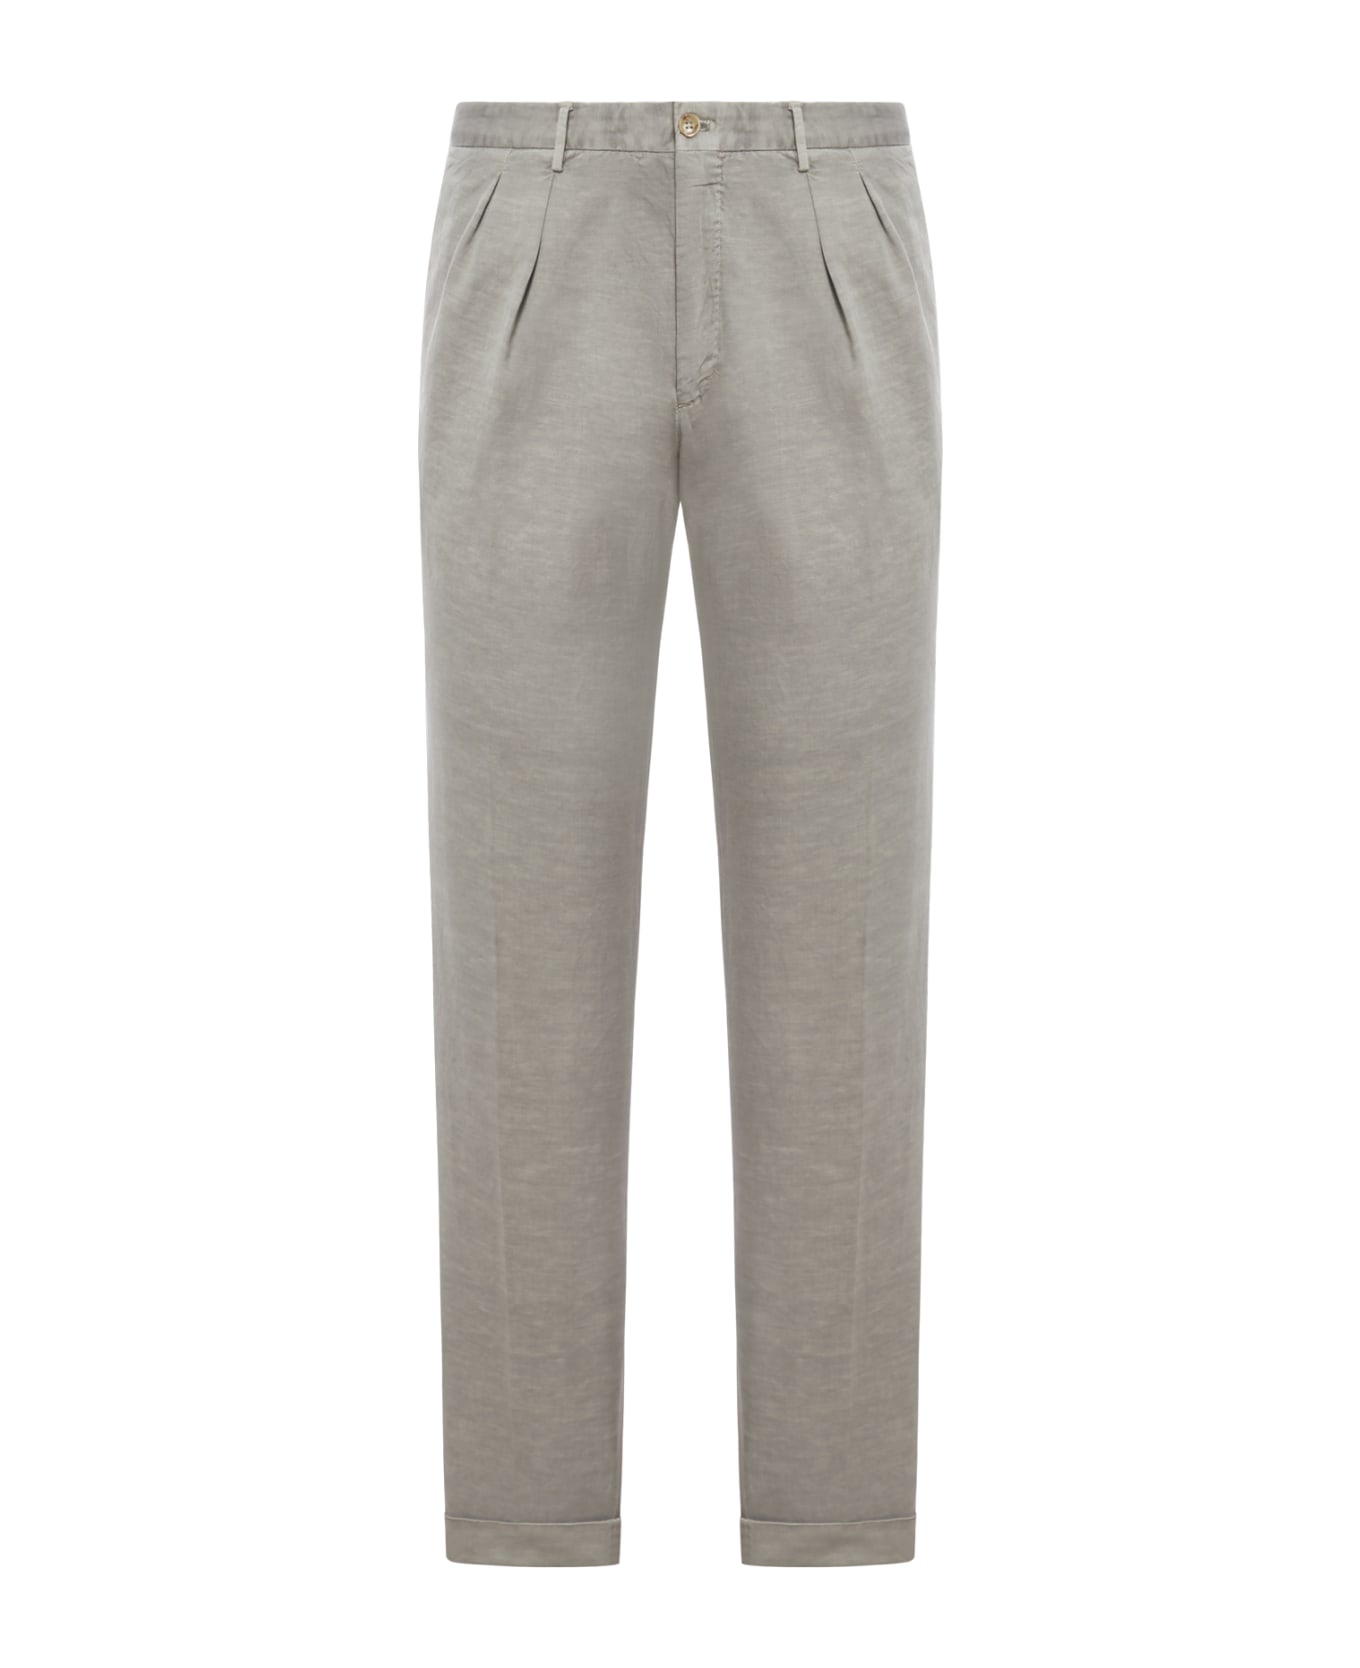 Incotex Pants - Medium Grey